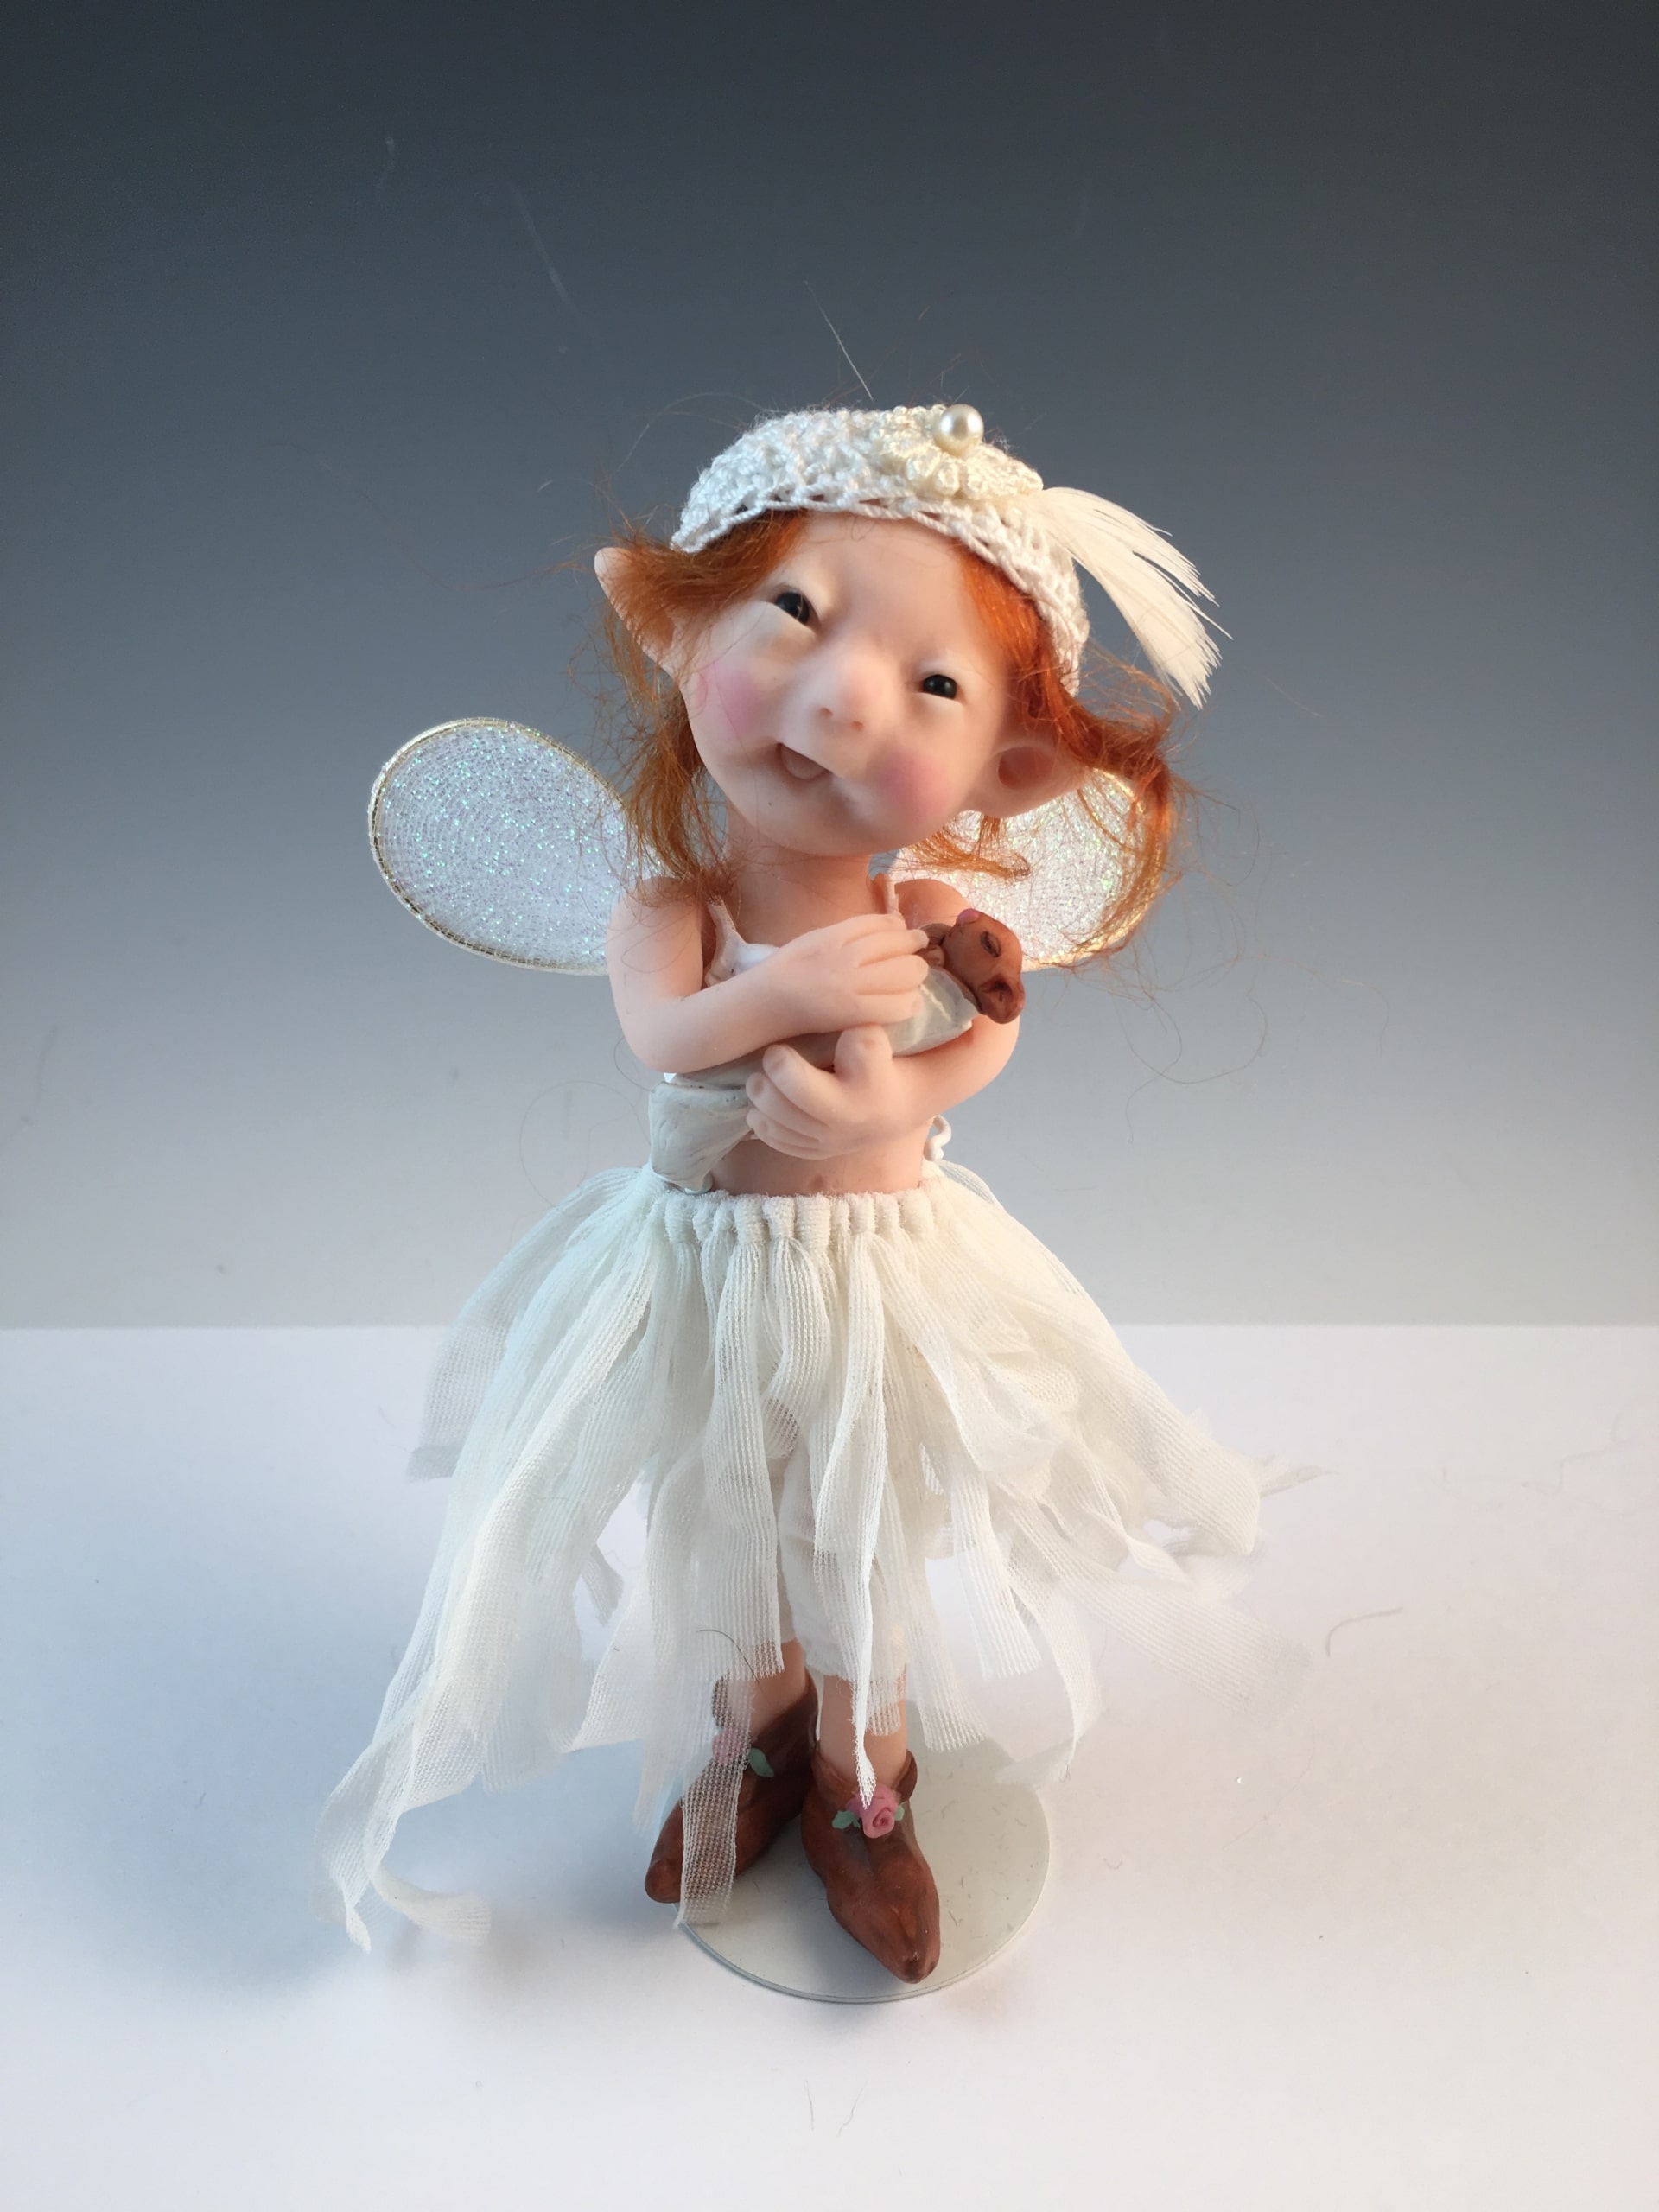 Cooper Dolls – Exclusive Handmade Dolls, Santa's and Fairies – Since 1980